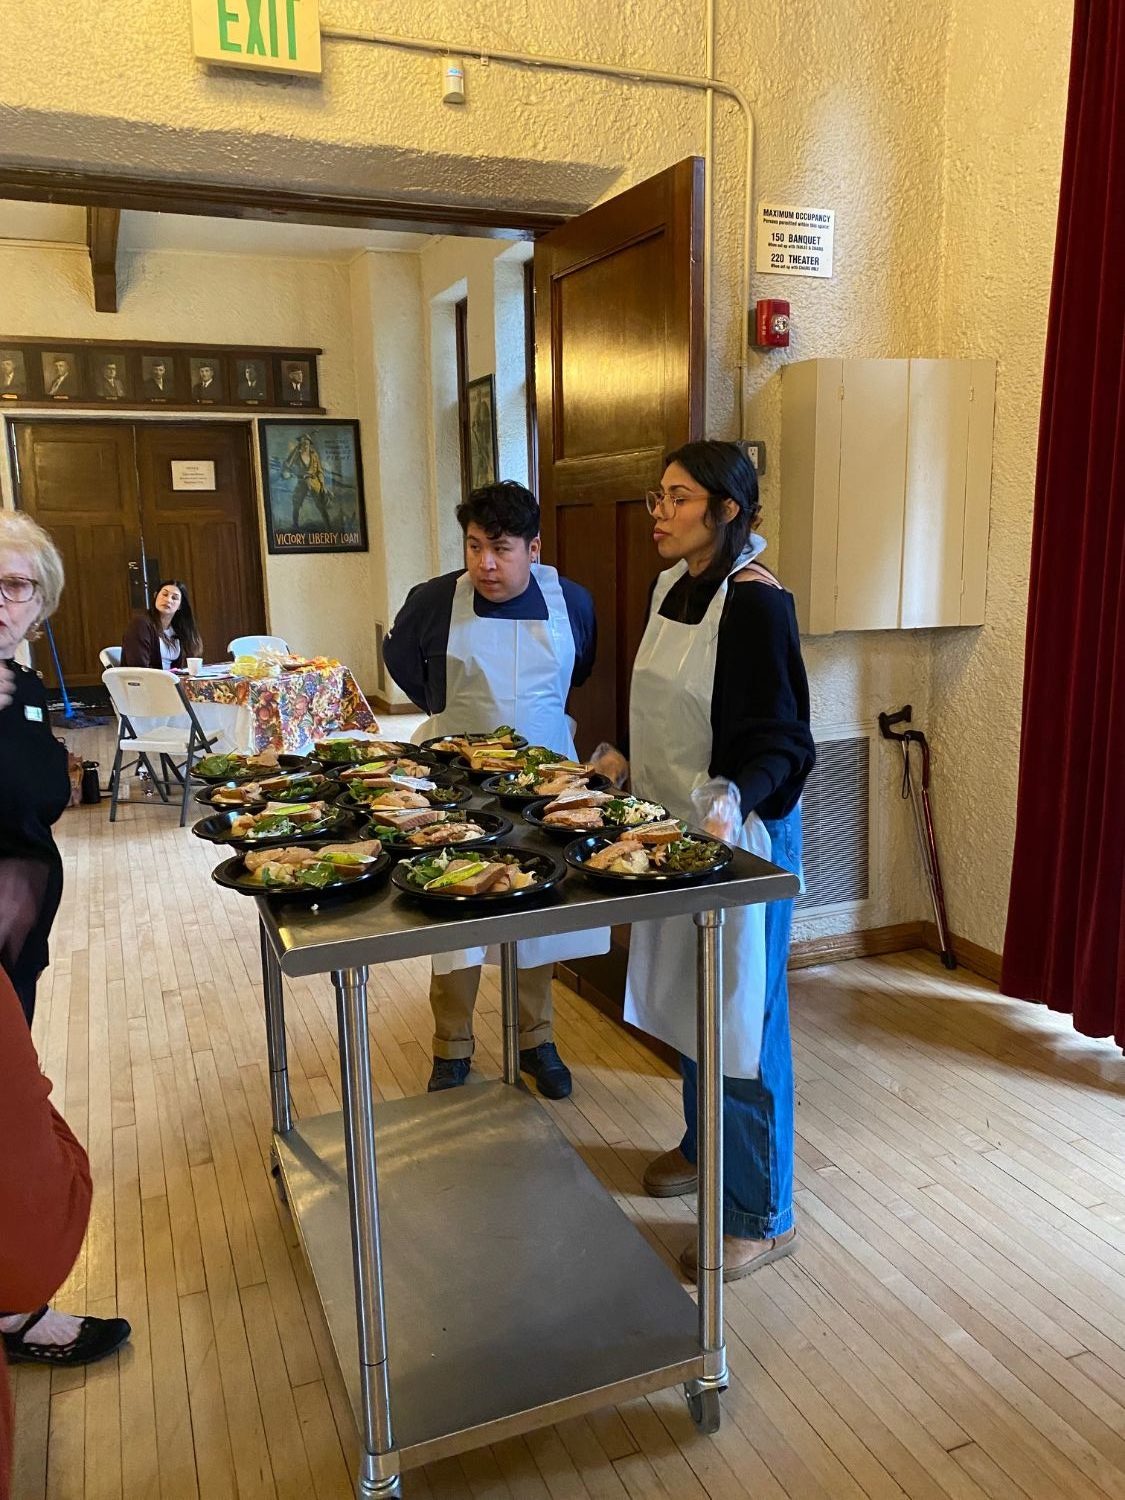 PHOTO: Alisa Hayashida | The South Pasadenan | Senior Center staff serves a Thanksgiving meal to seniors at the War Memorial Building in South Pasadena.